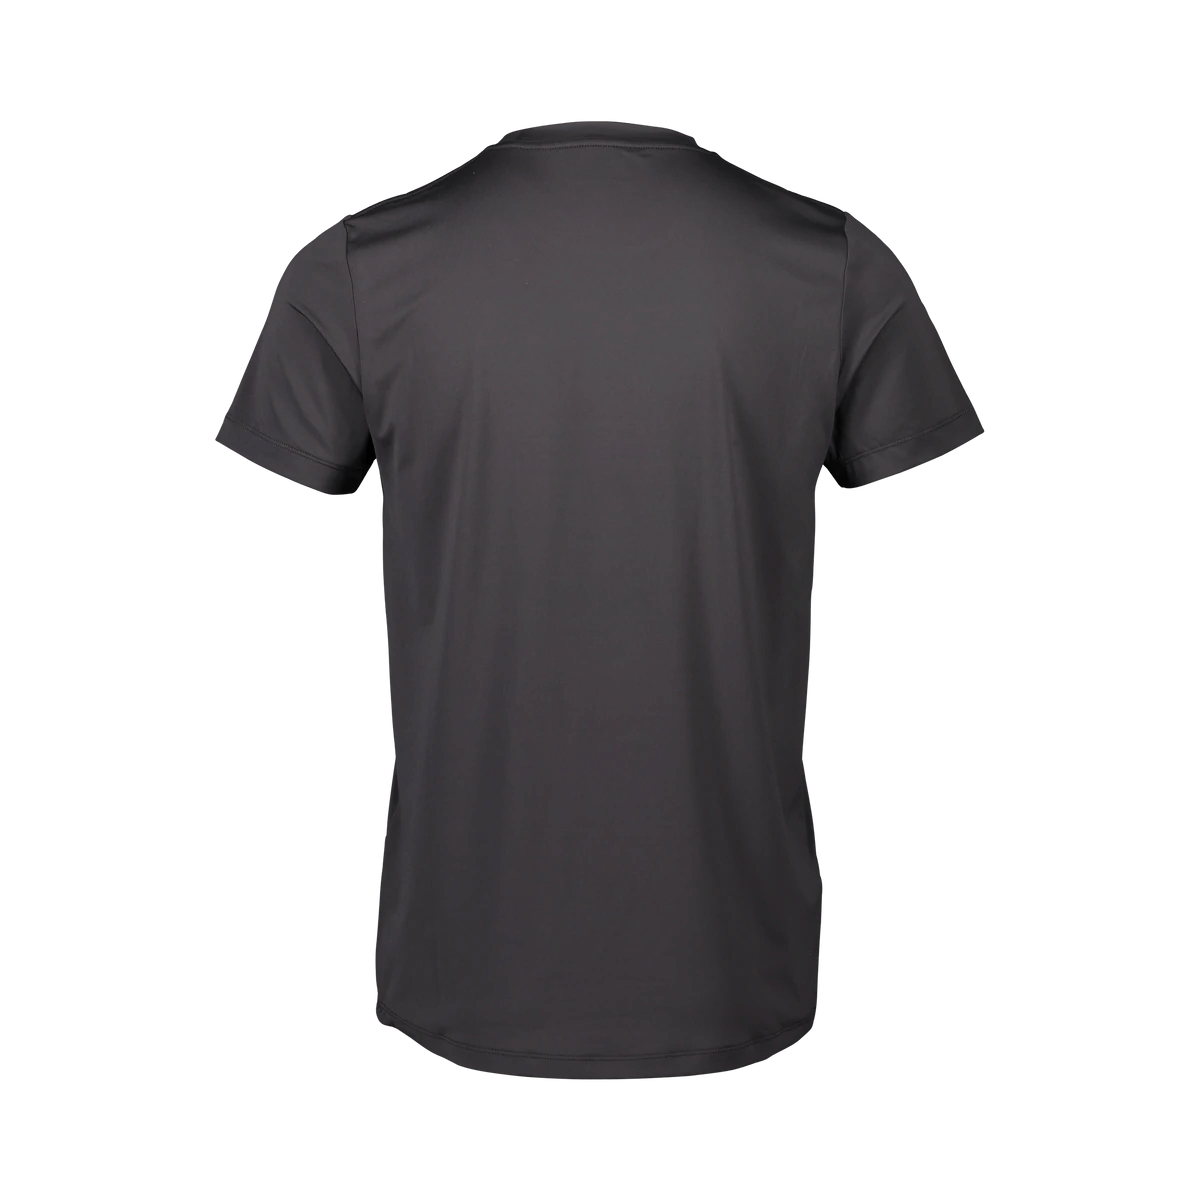 Tシャツ 52901-1043 エンデューロライトティー M's Reform Enduro Light Tee - Sylvanite Grey [メンズ]